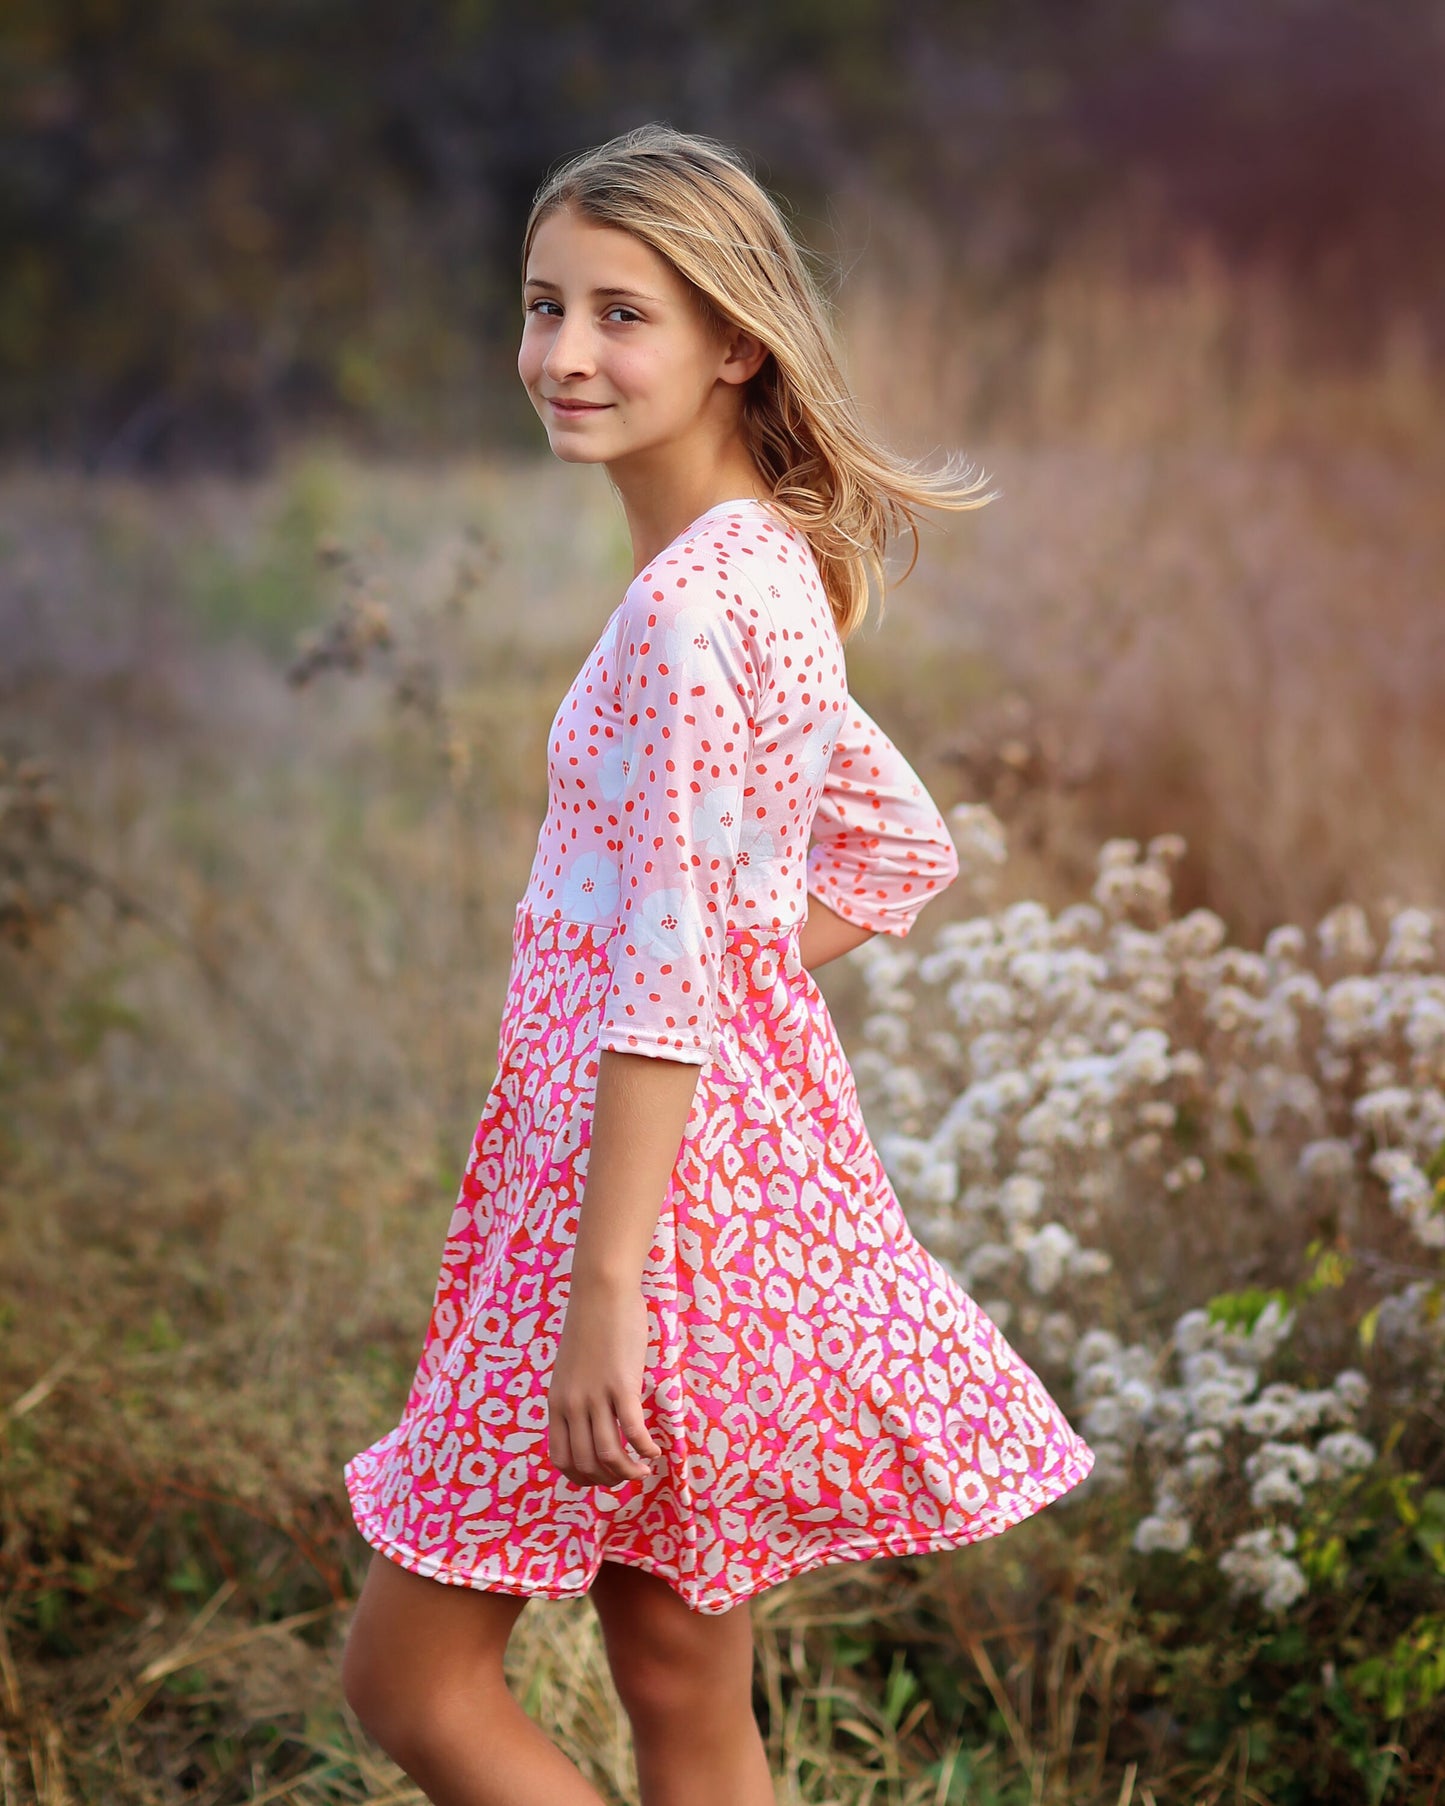 A-Line Dress - Girls Dress - Twirly Dress - Birthday Dress - Party Dress - Pink and Coral Animal Print Floral Dress